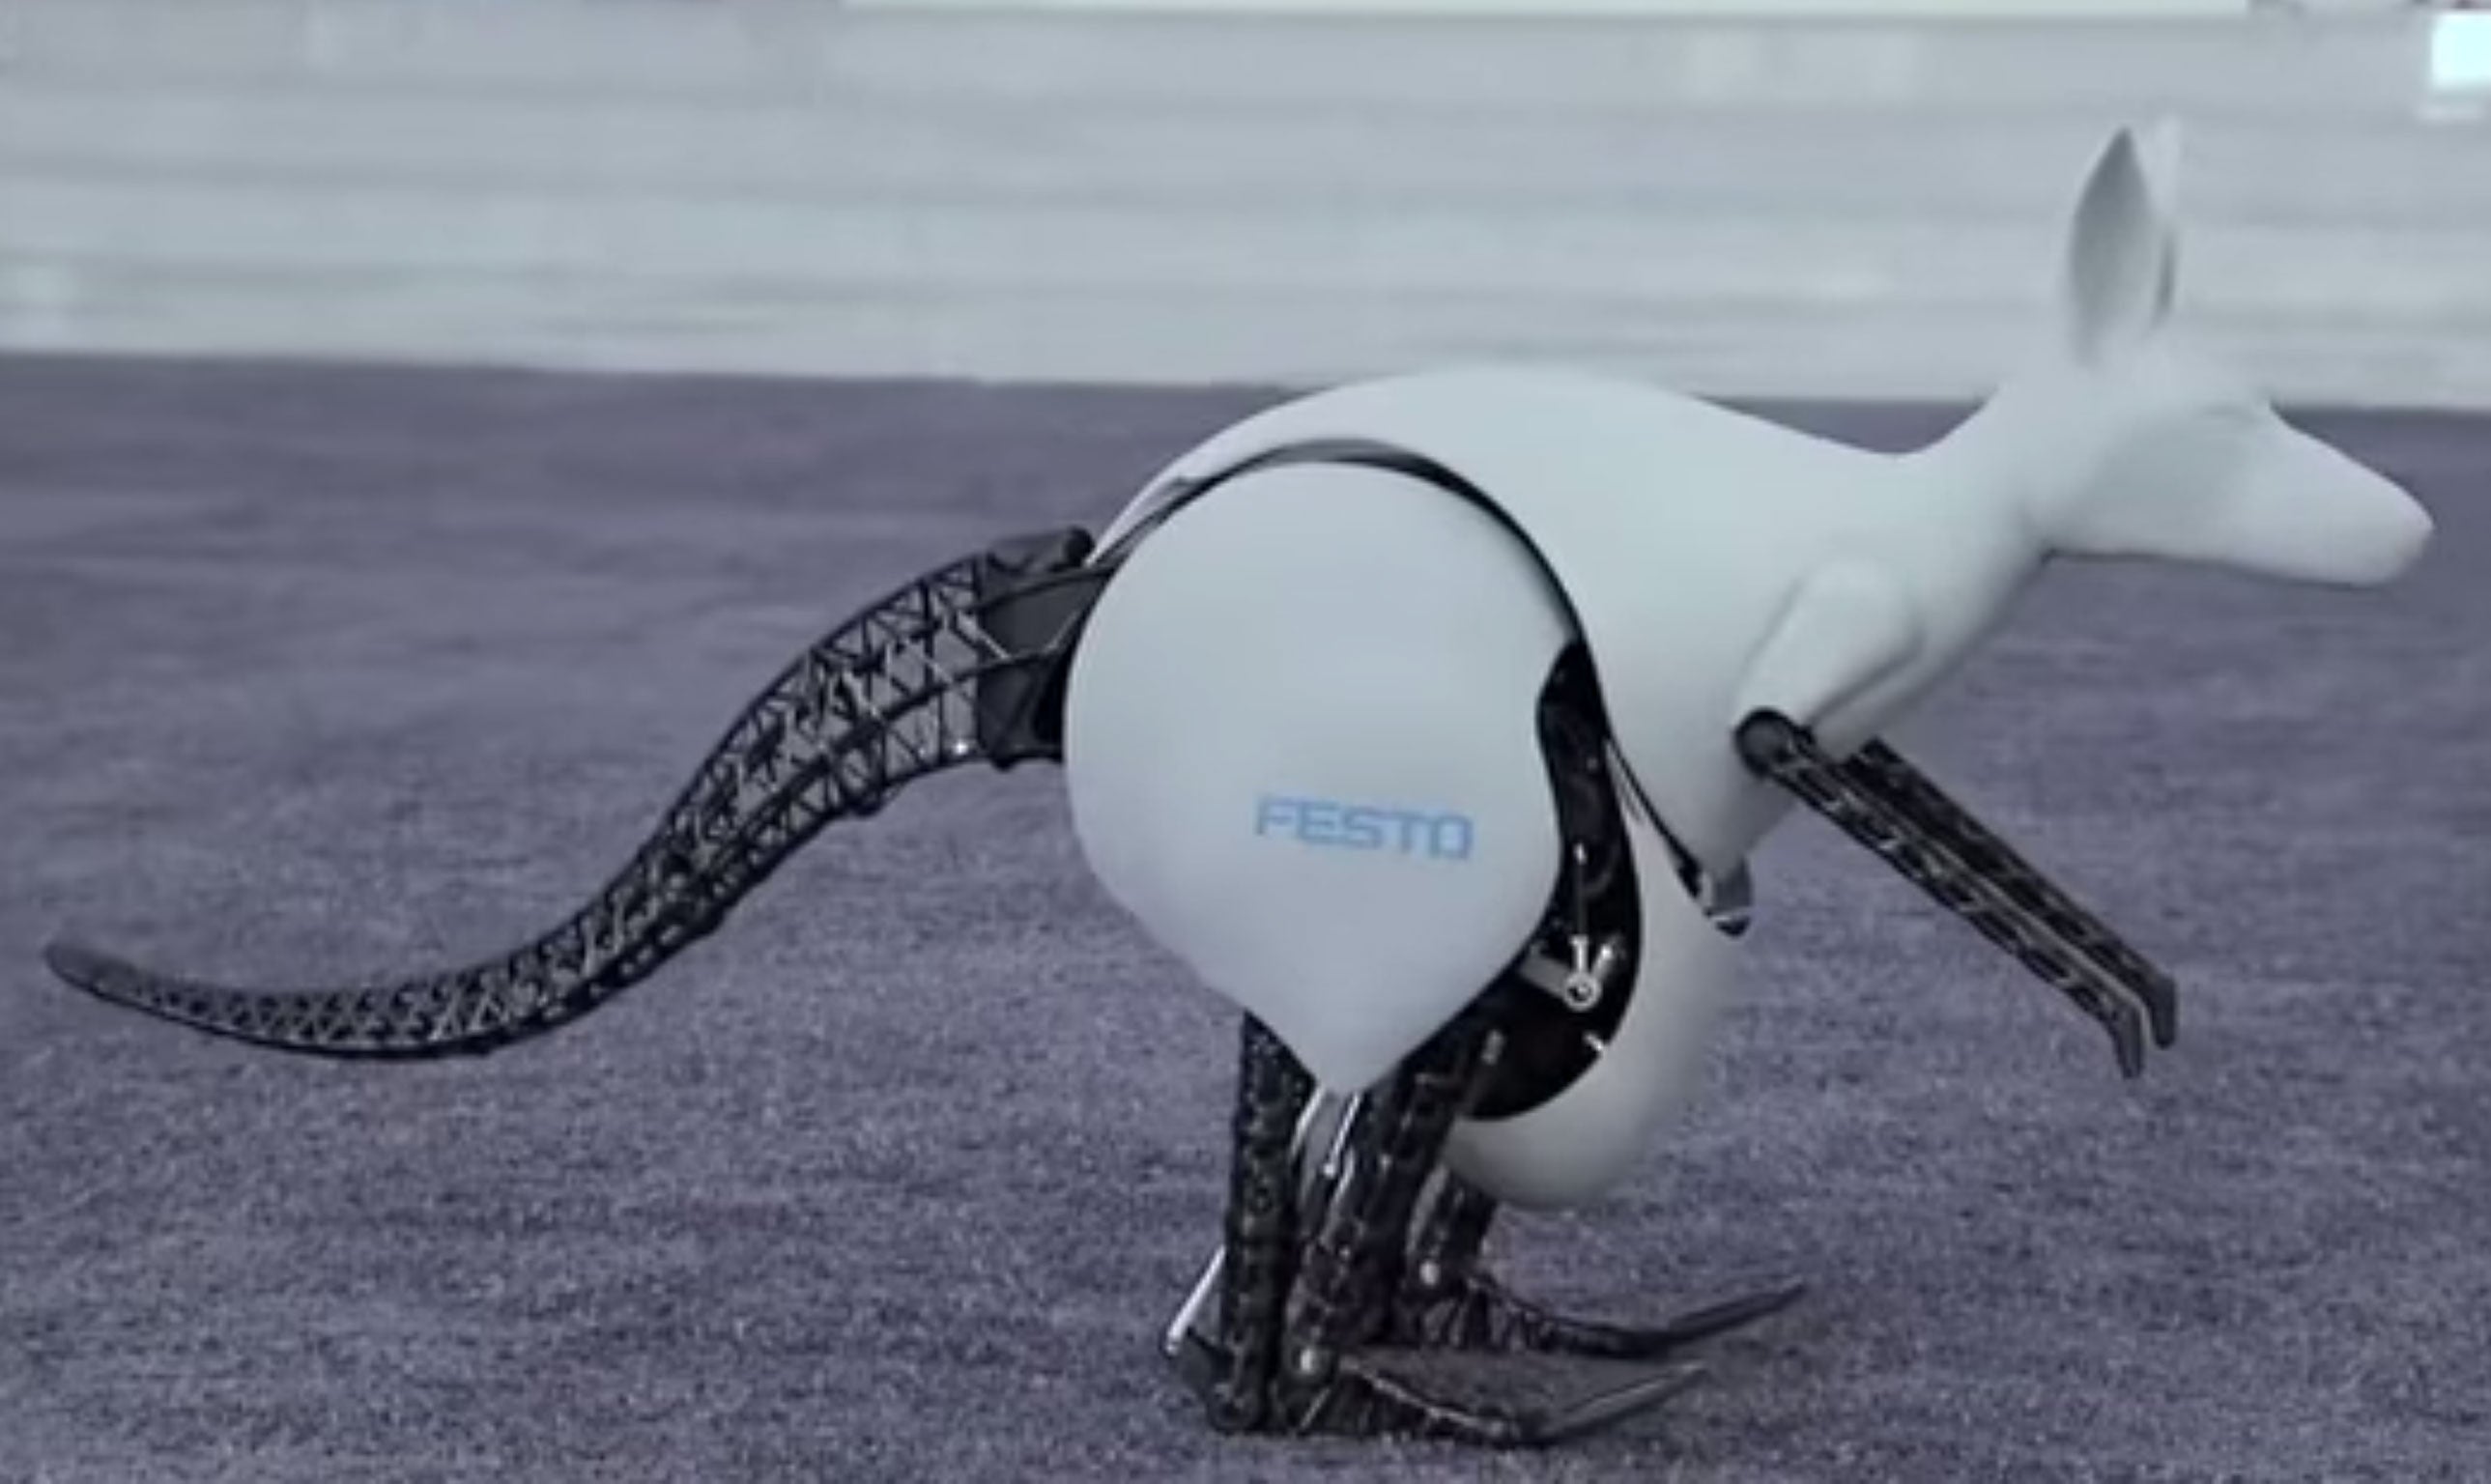 The 'Bionic Kangaroo' developed by Festo